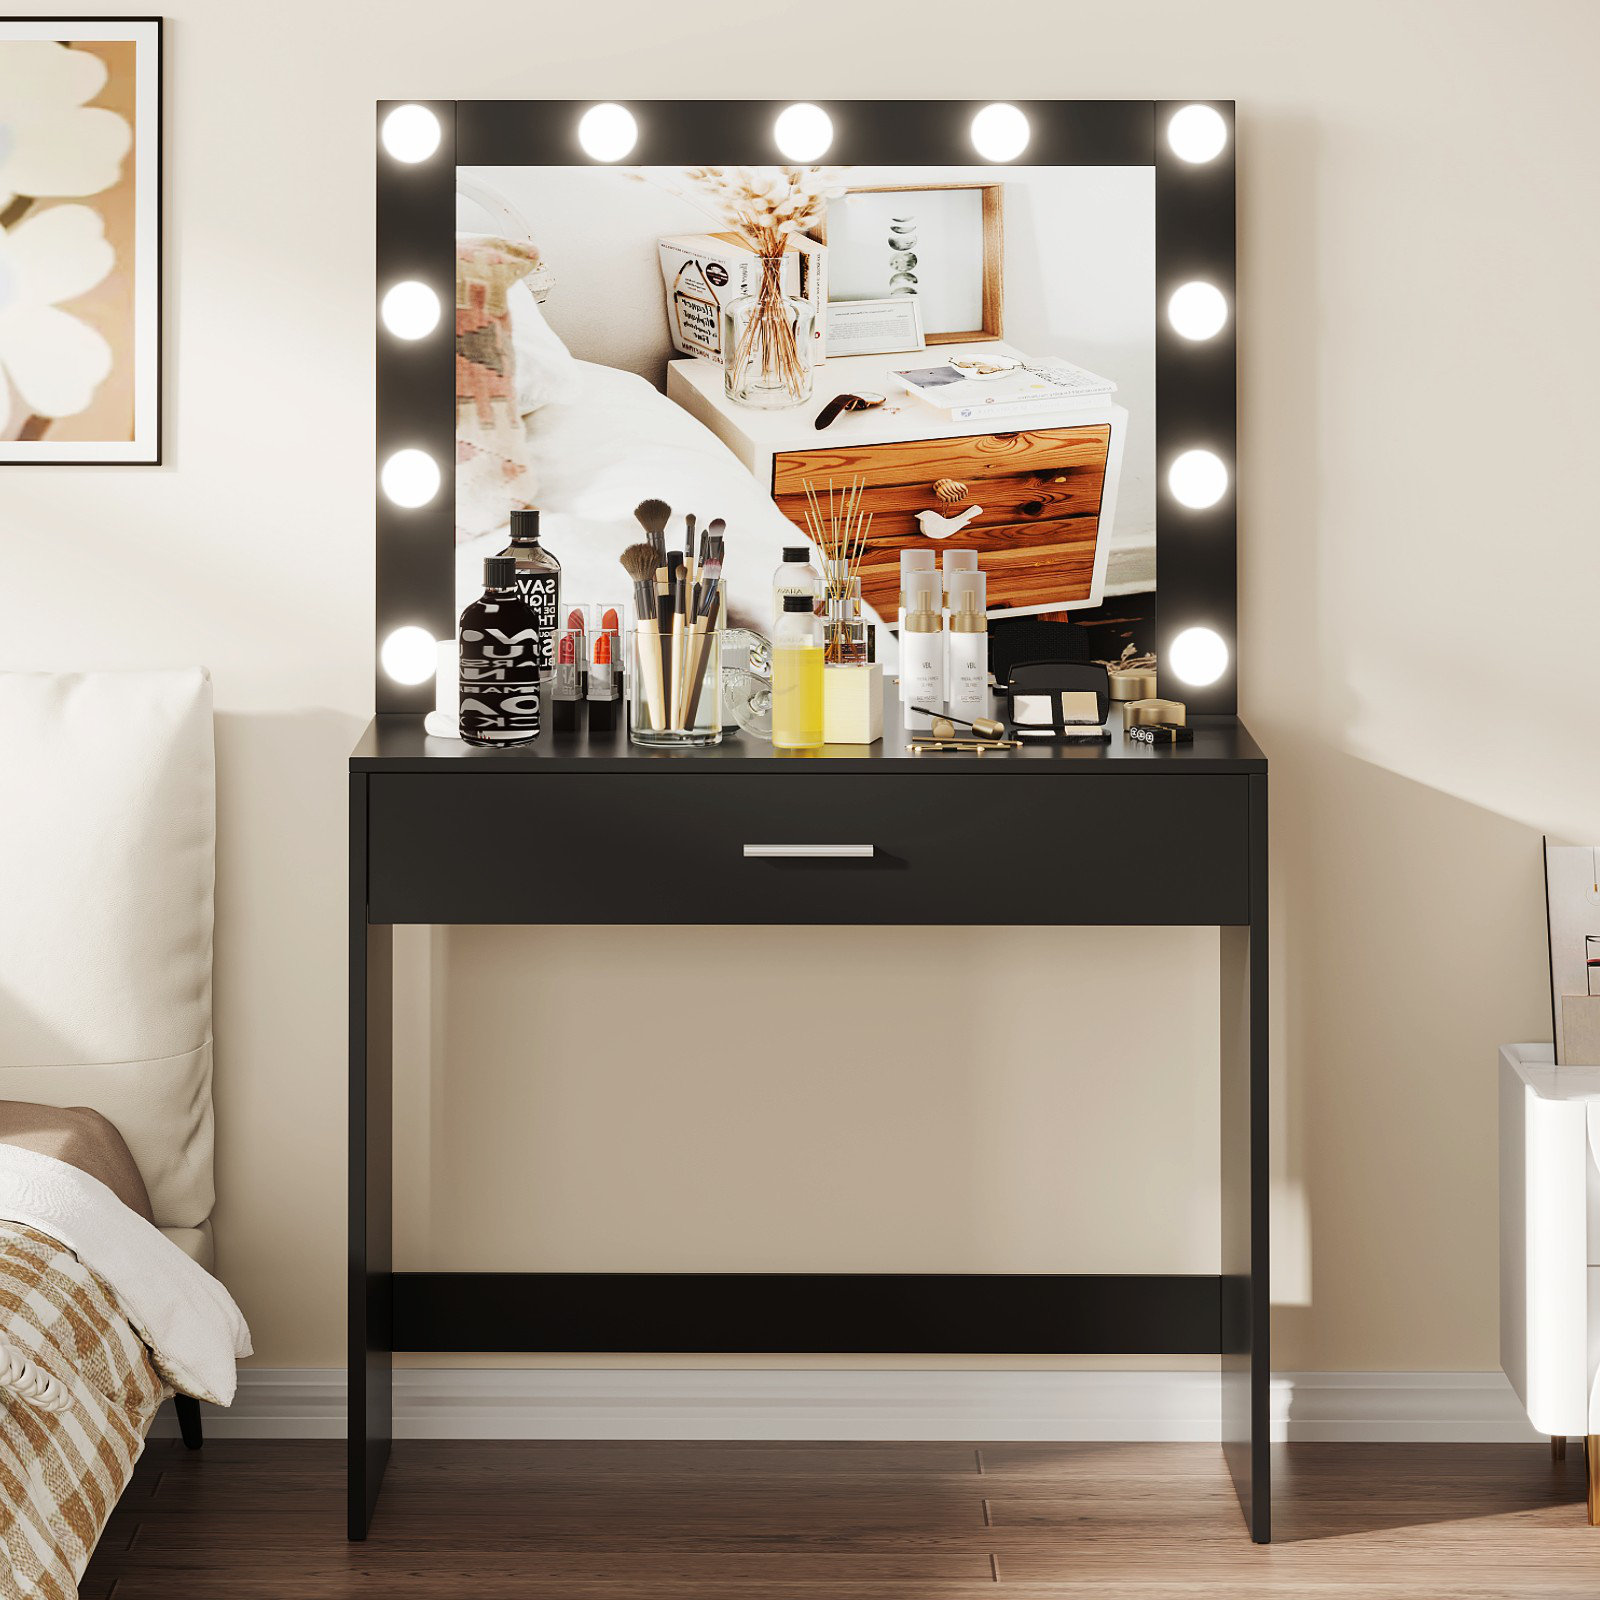 Choosing Dressing Room Mirrors Based On Lighting Best Practices | Zen